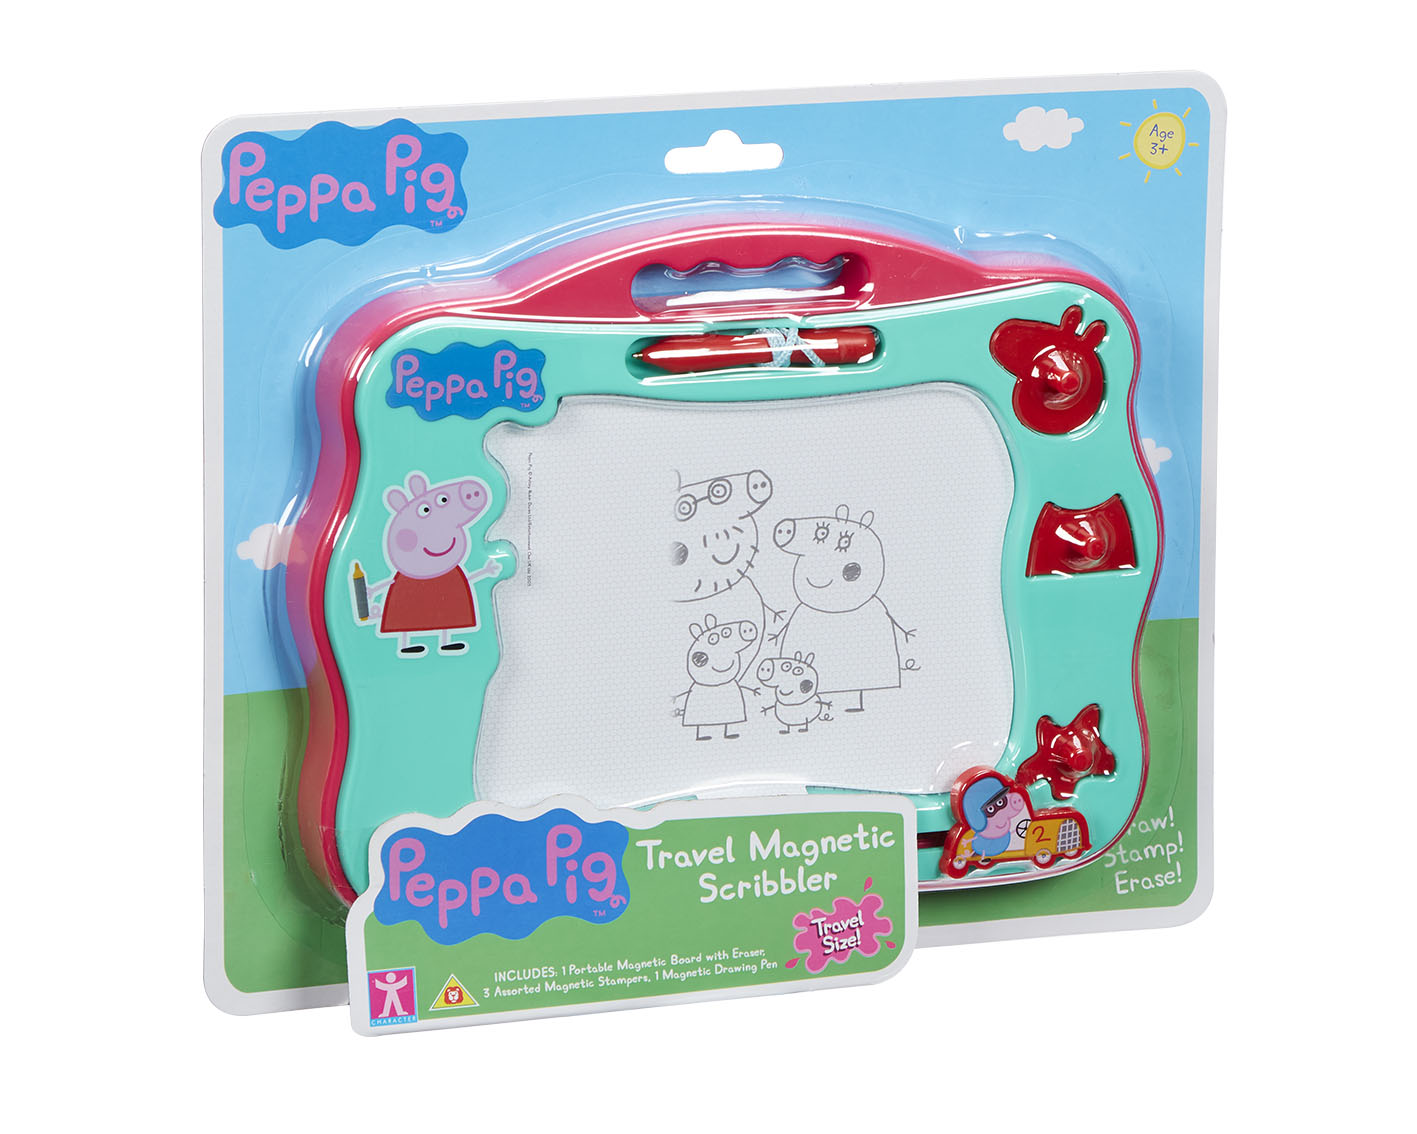 Peppa Pig’s Travel Magnetic Scribbler